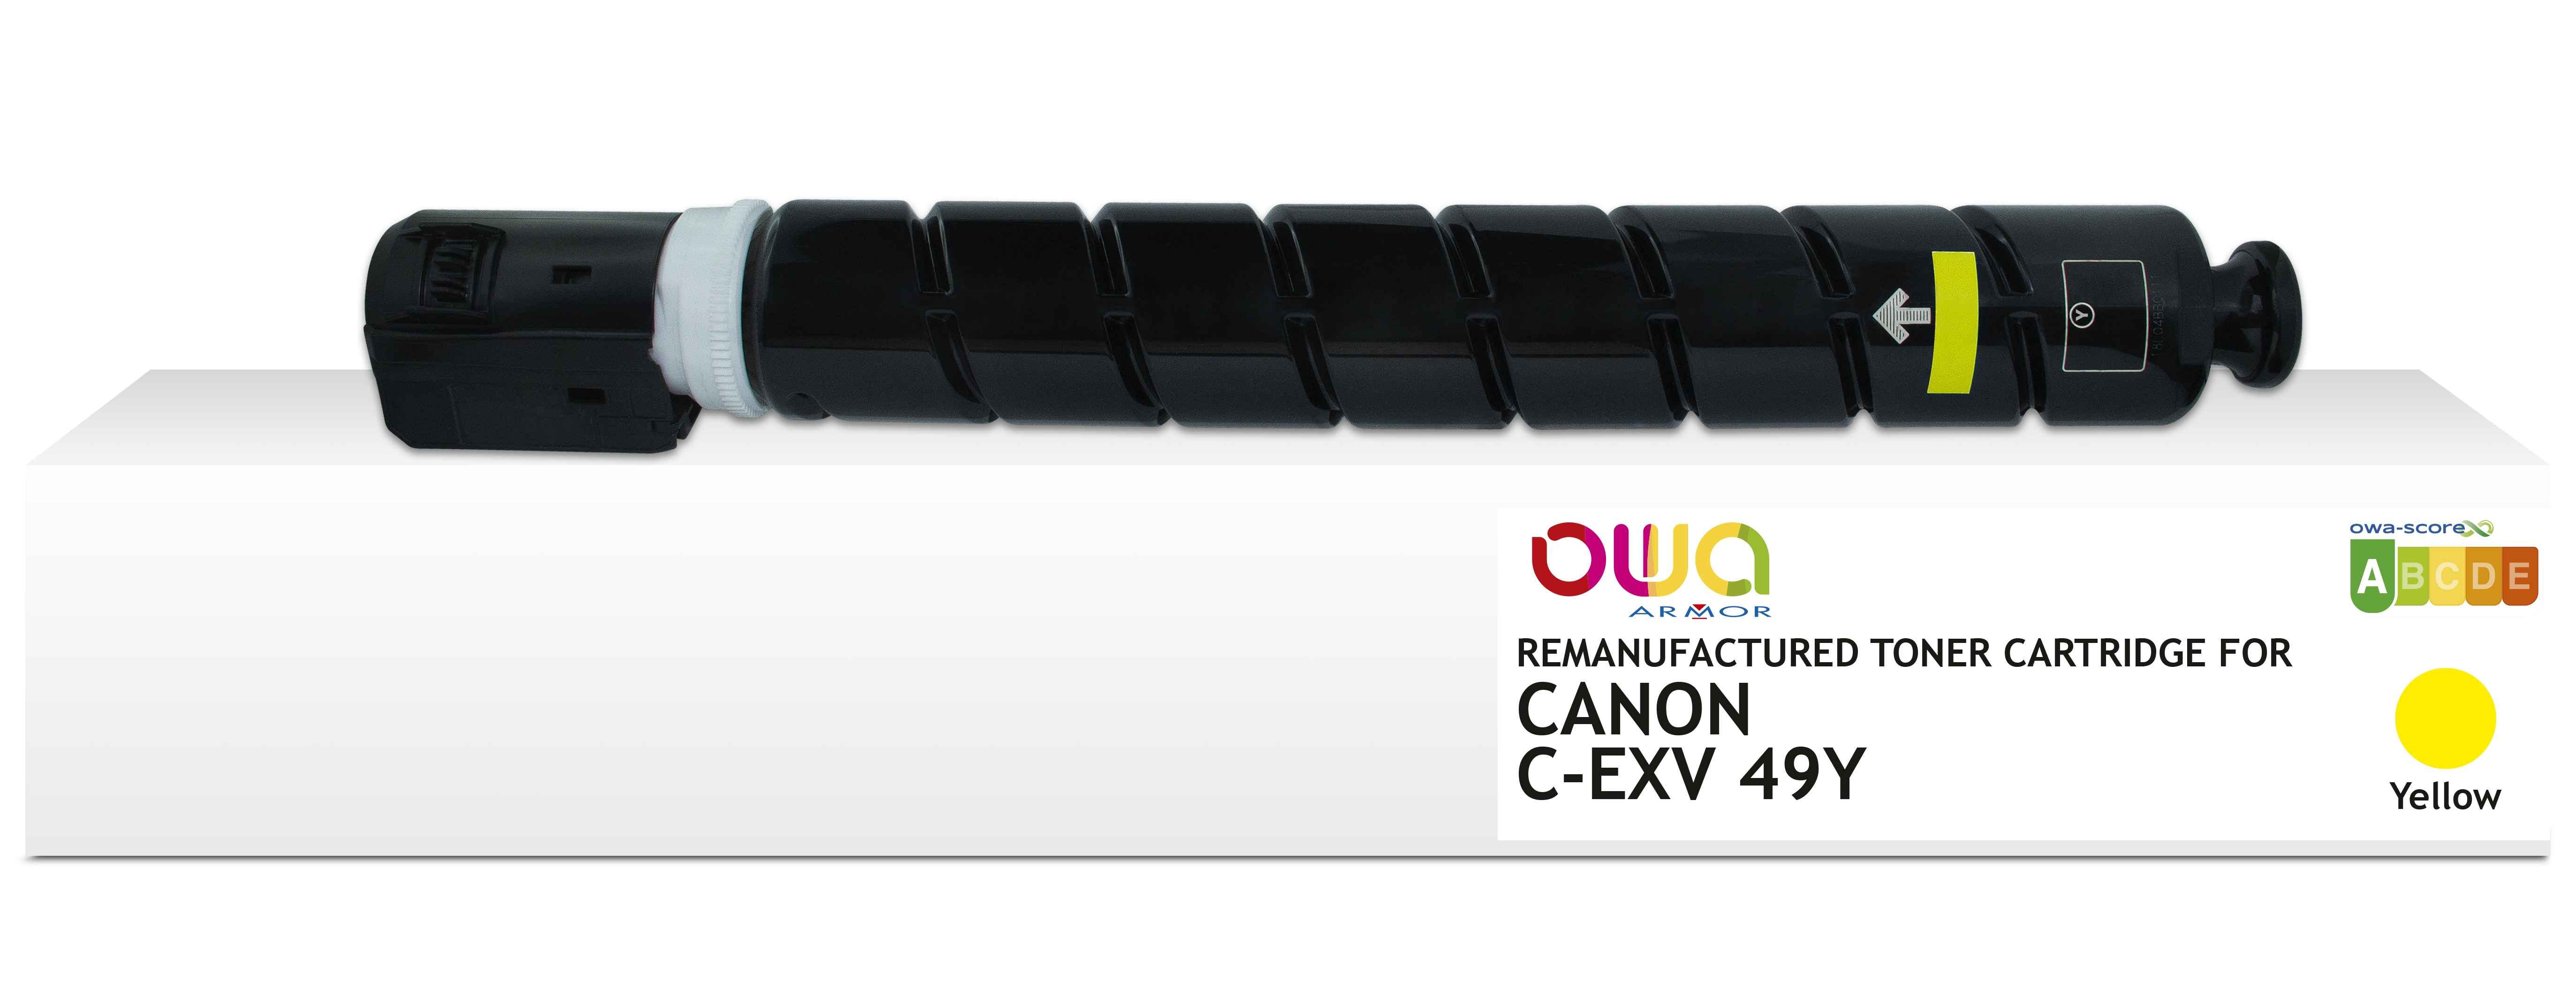 OWA Armor toner pro CANON iR ADVANCE C33xx, 36000 stran, C-EXV49 K, černý/black